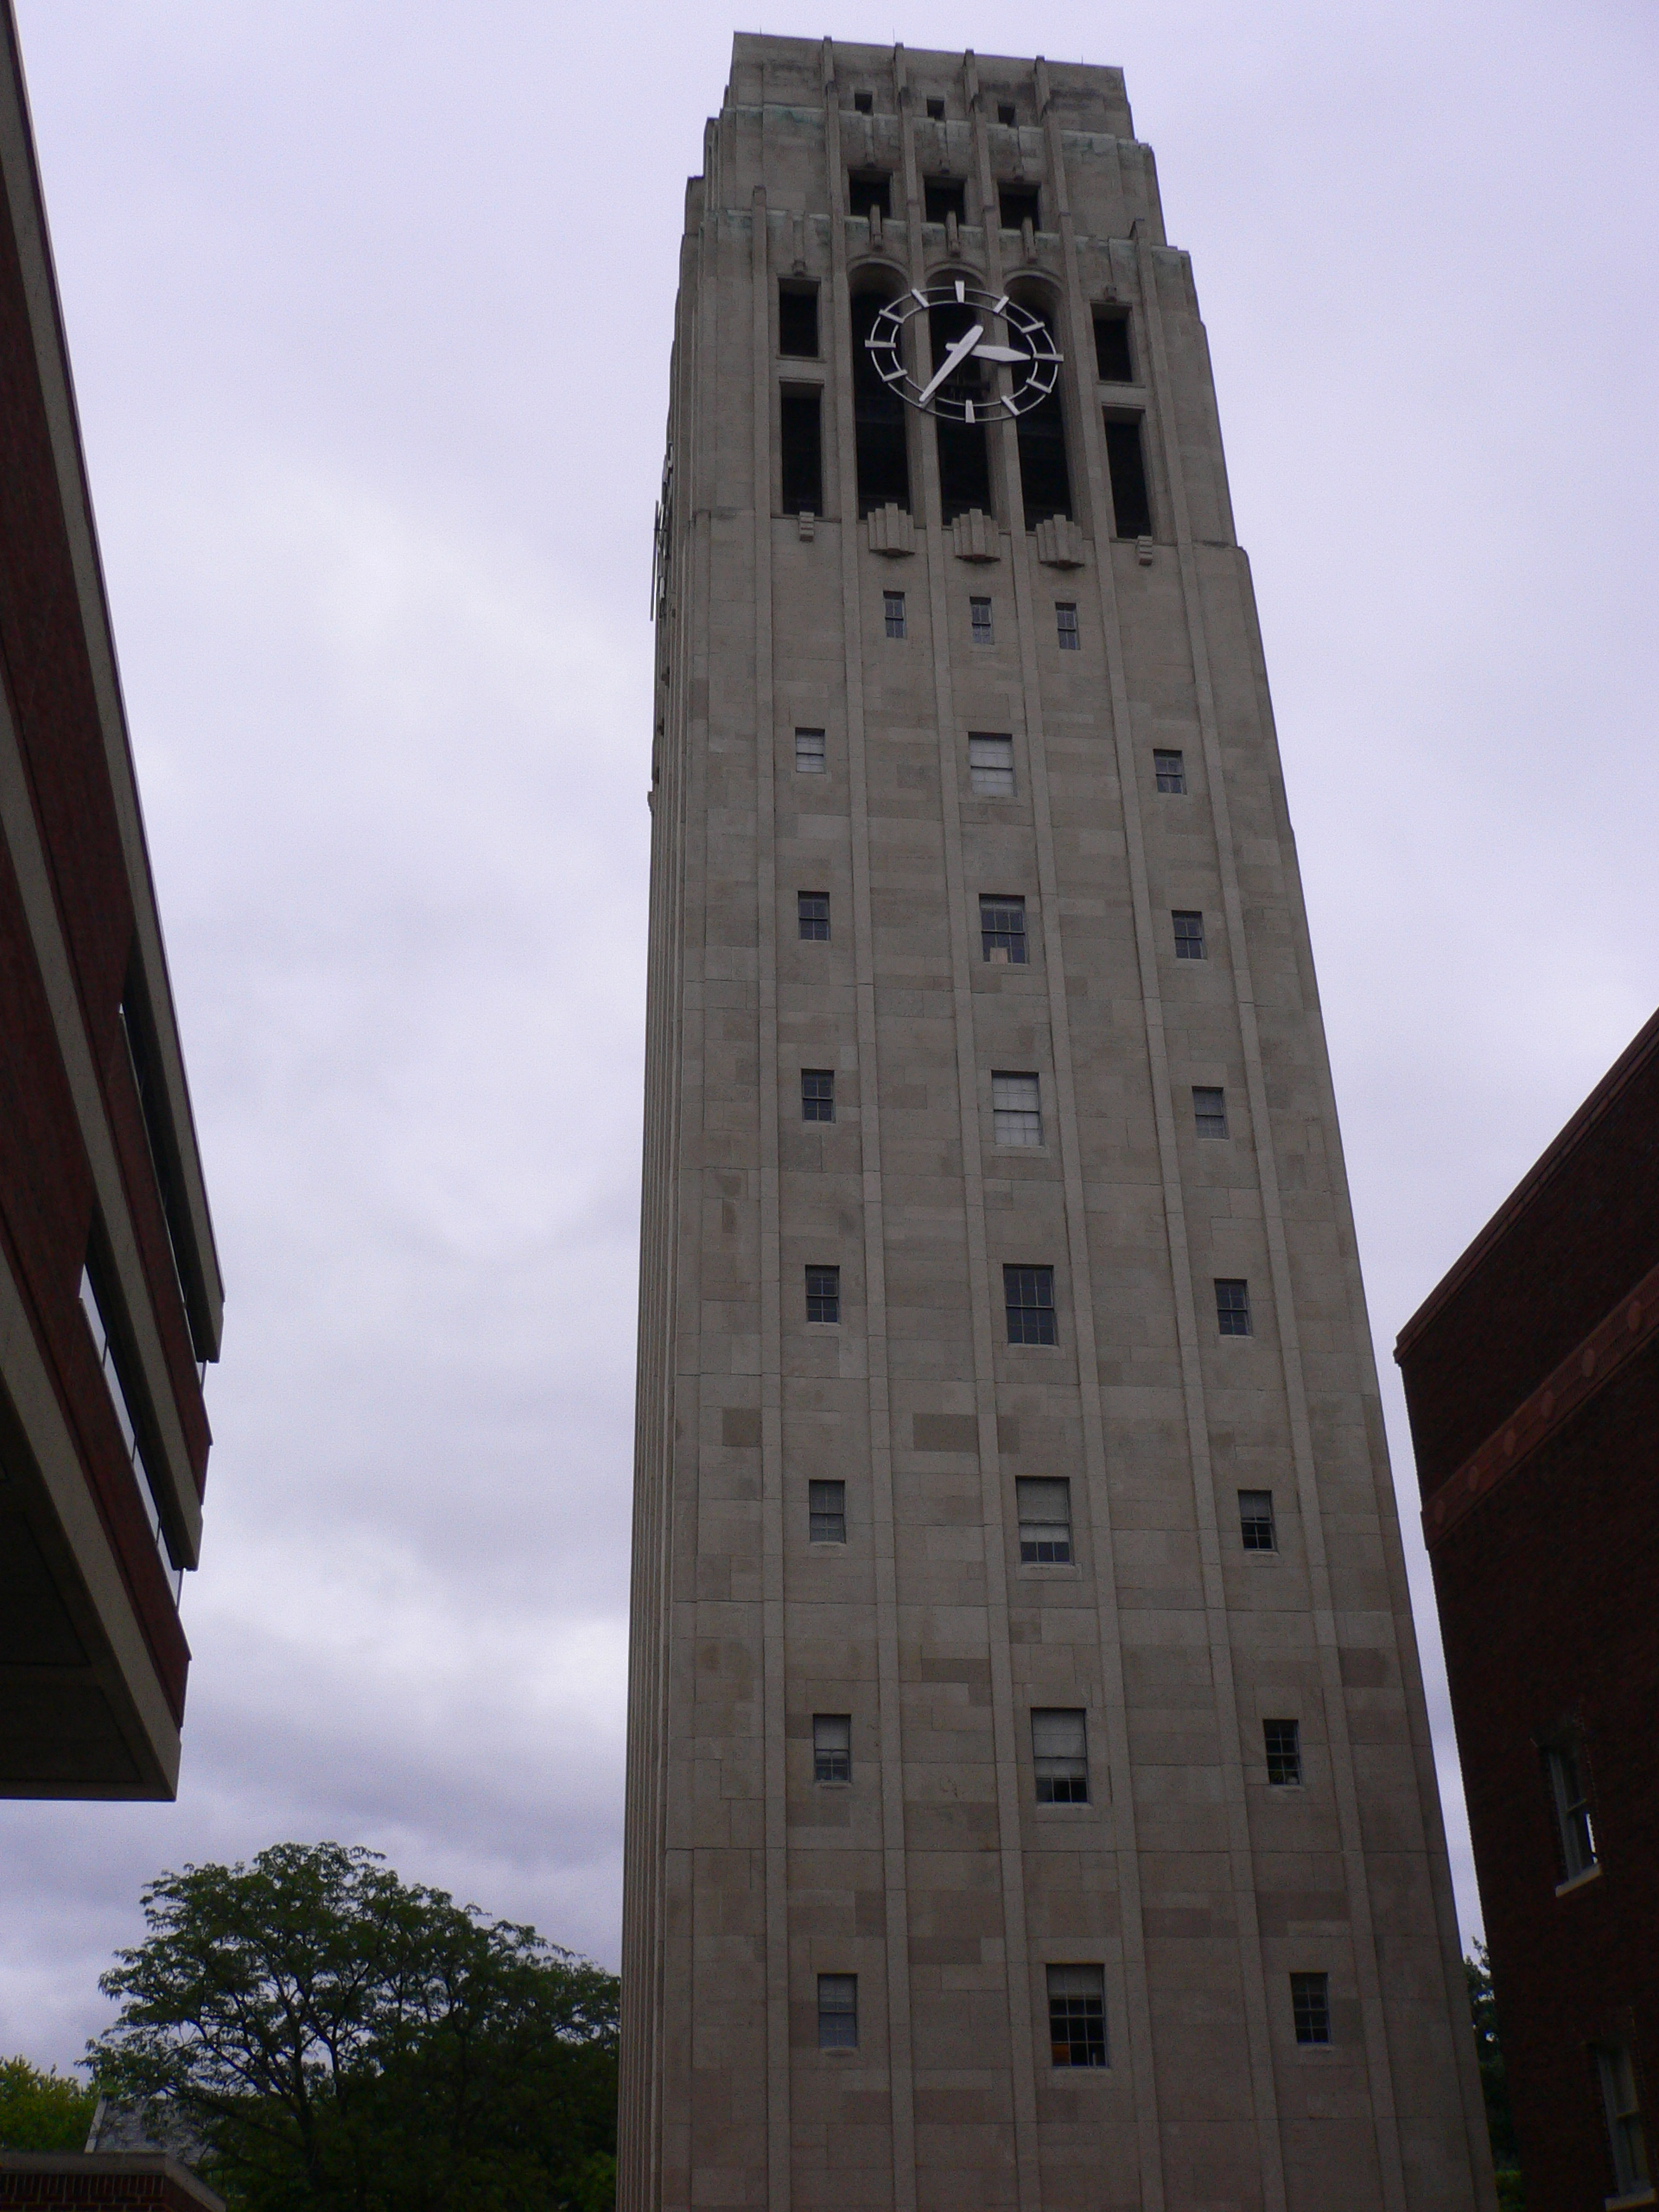 Clock tower photo